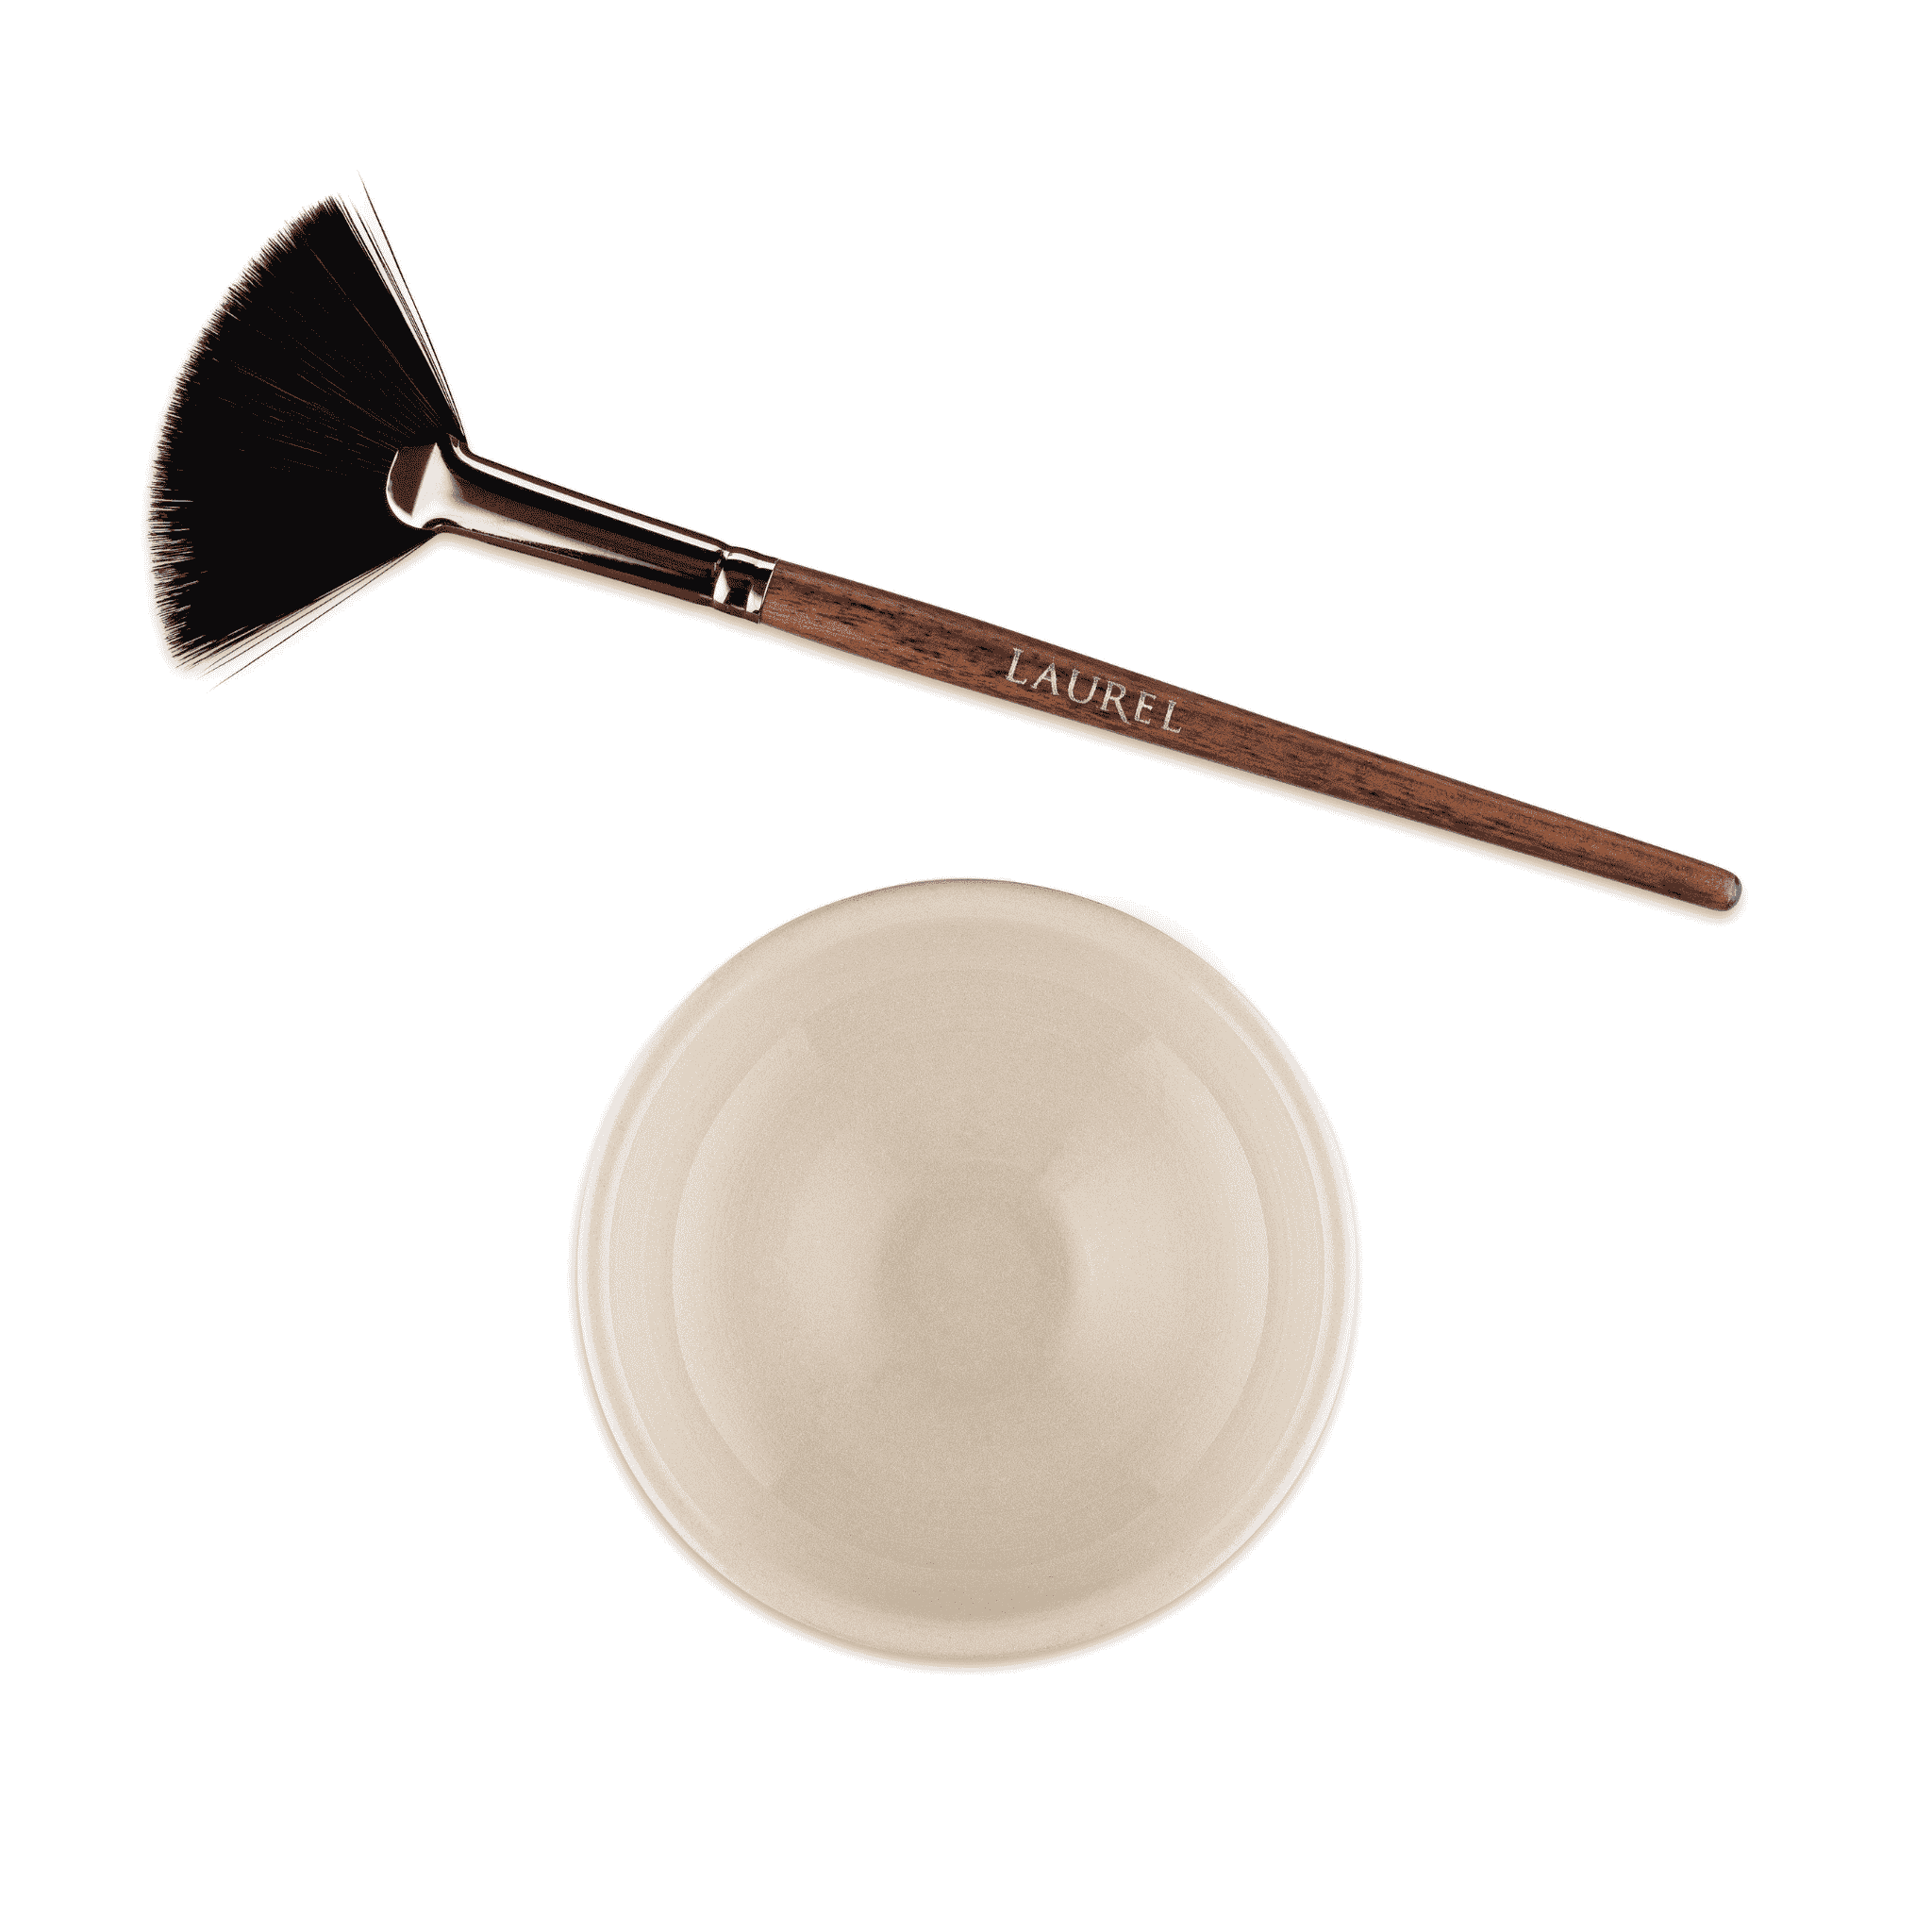 Mask Brush & Bowl - Laurel Skin